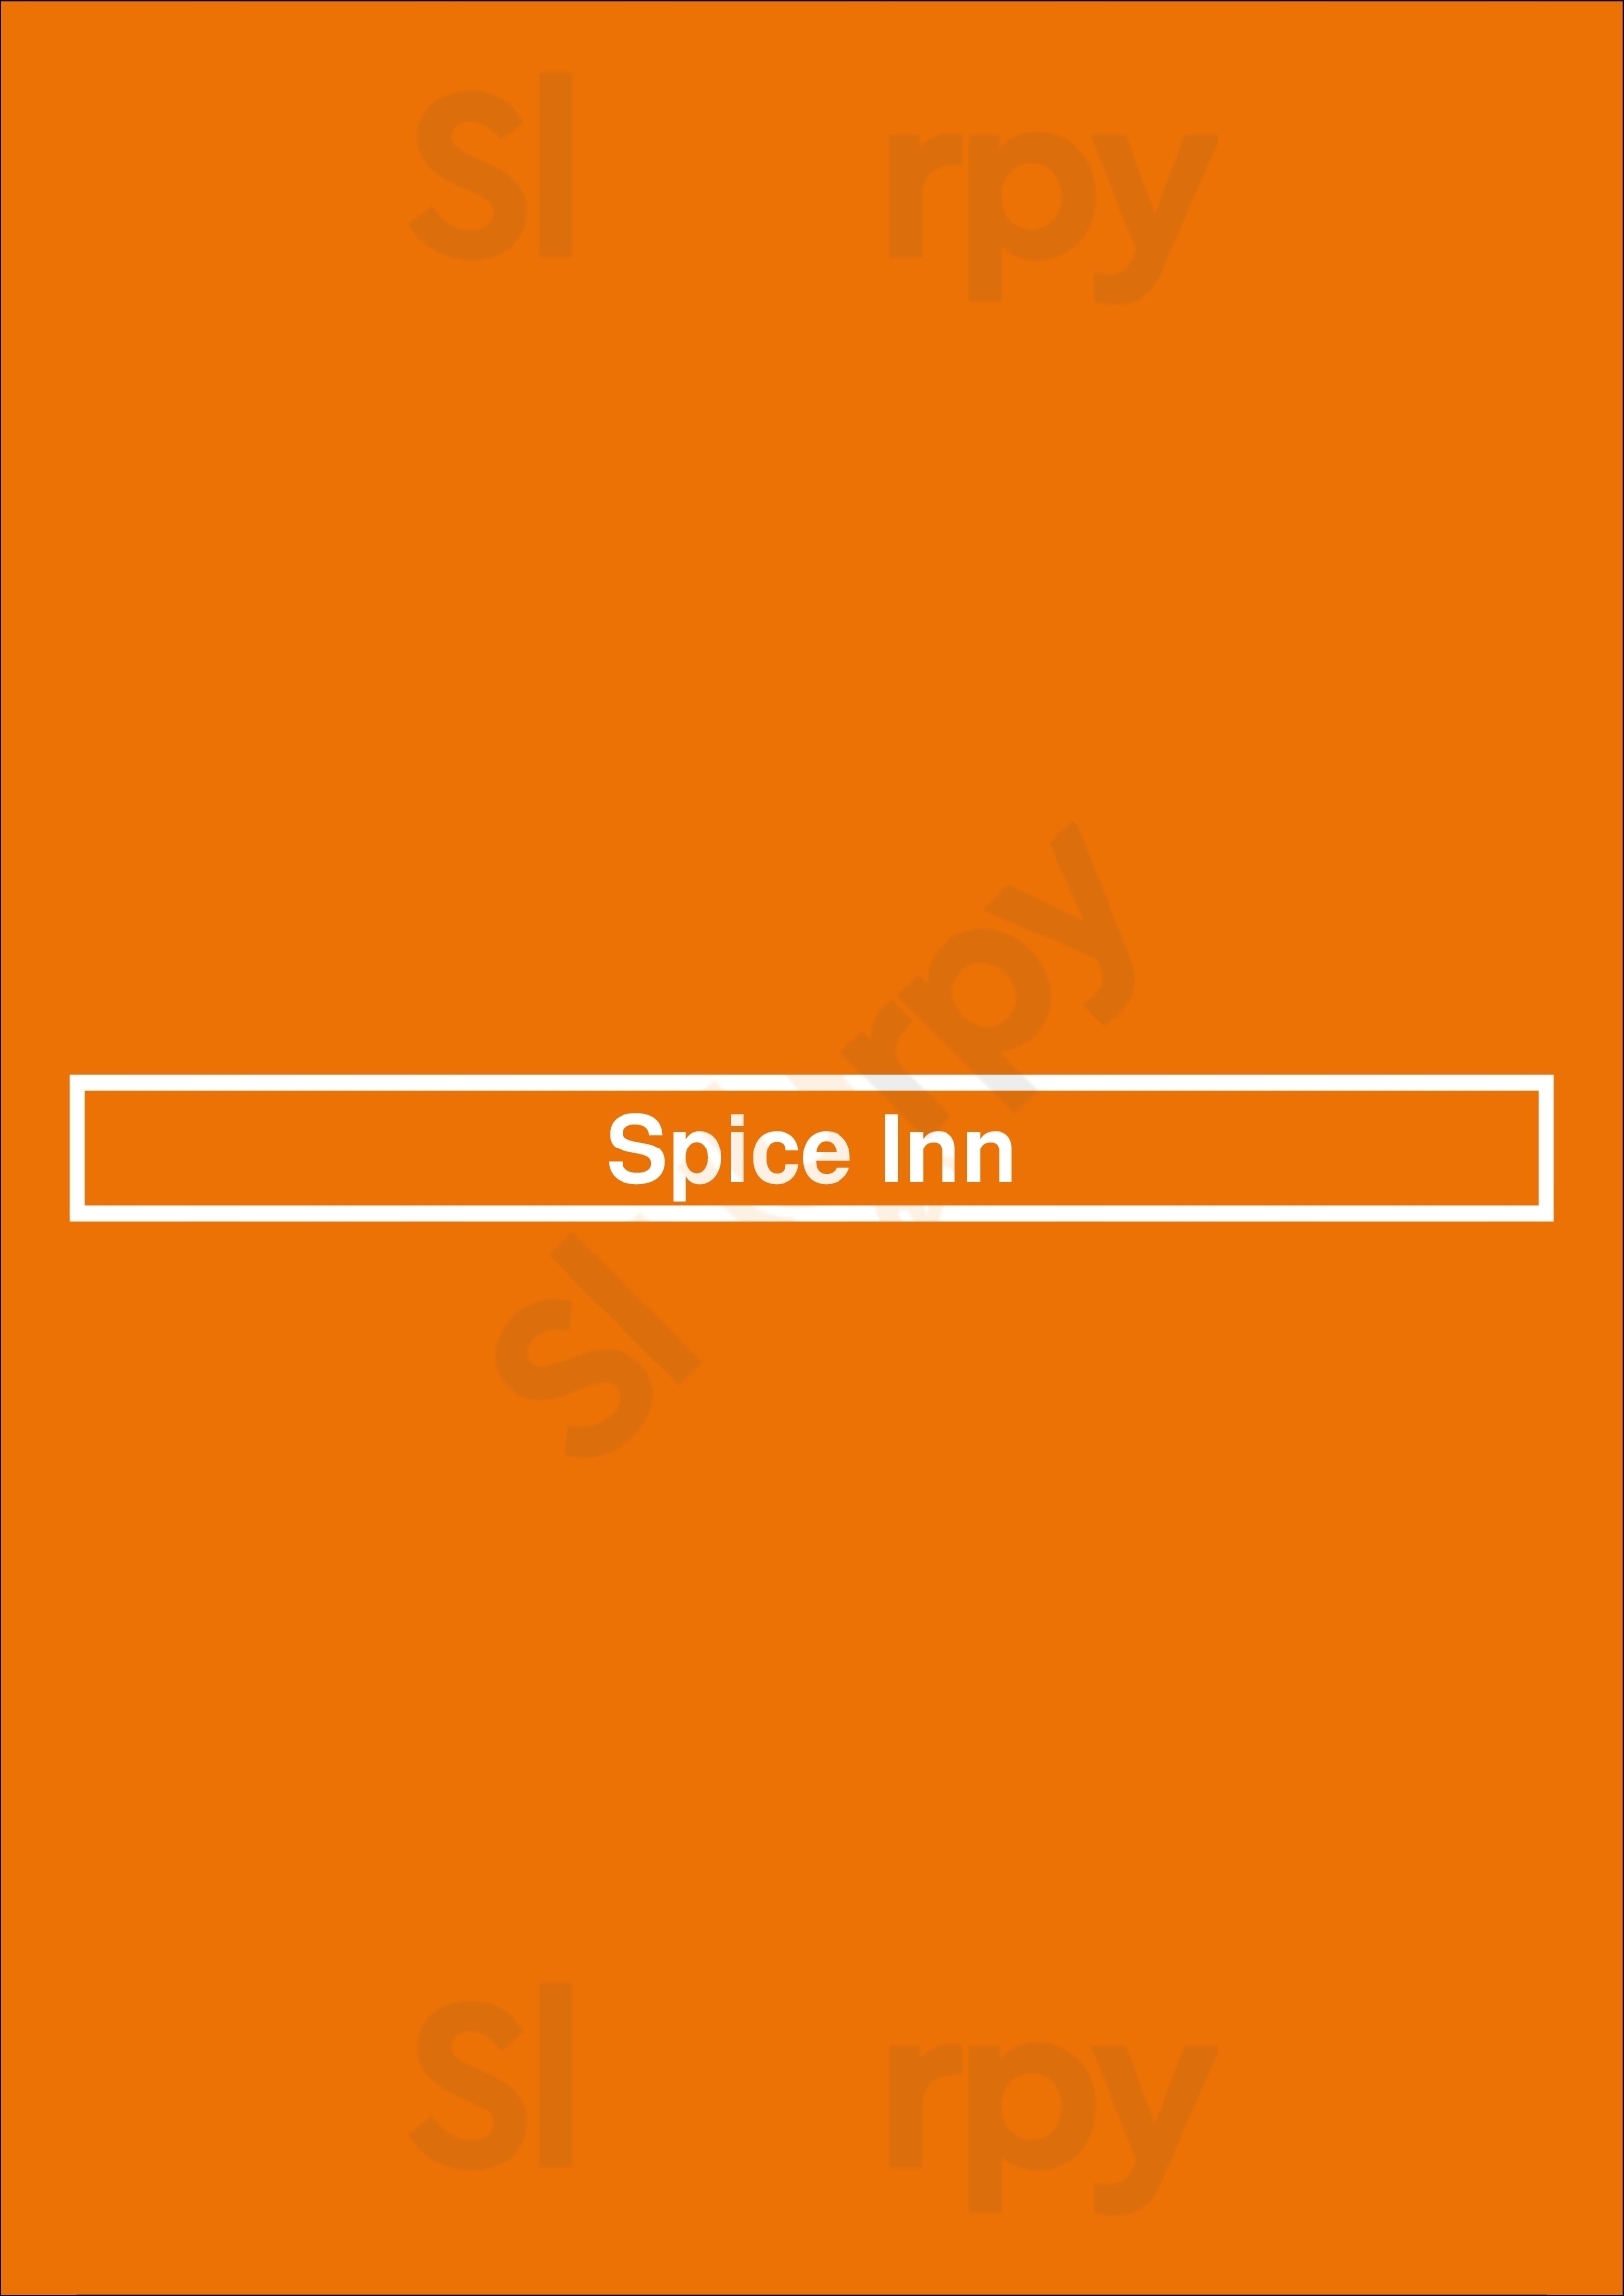 Spice Inn King's Lynn Menu - 1